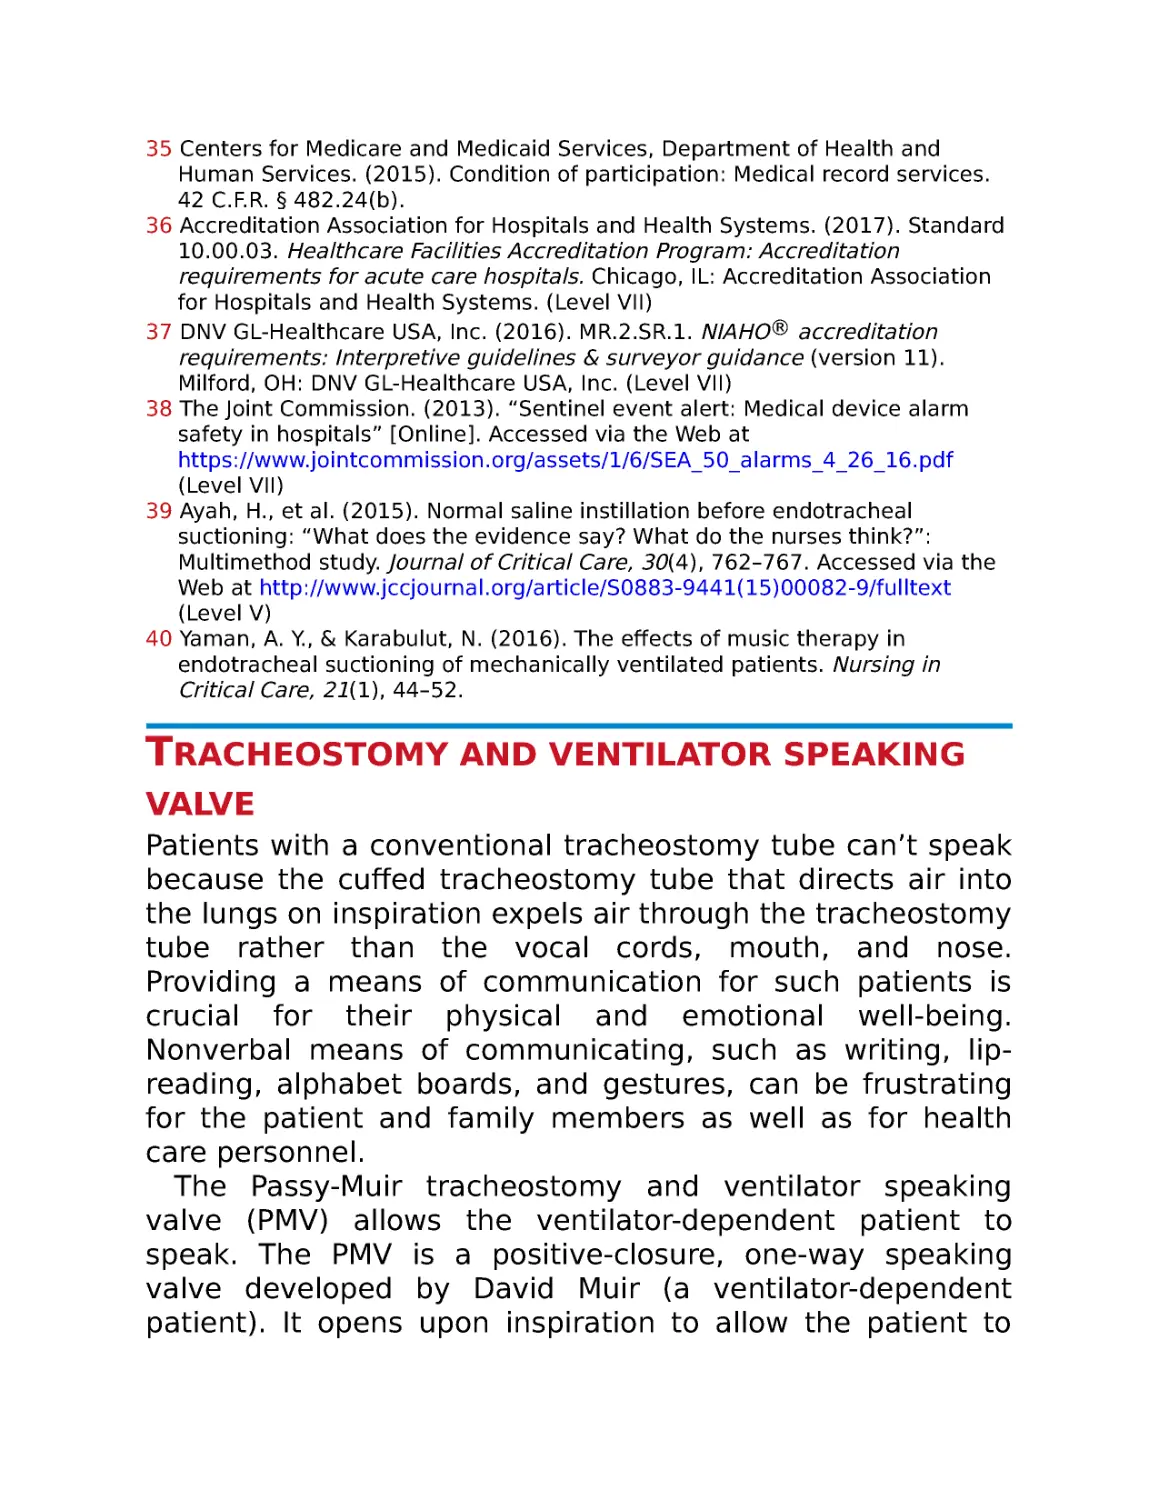 Tracheostomy and ventilator speaking valve